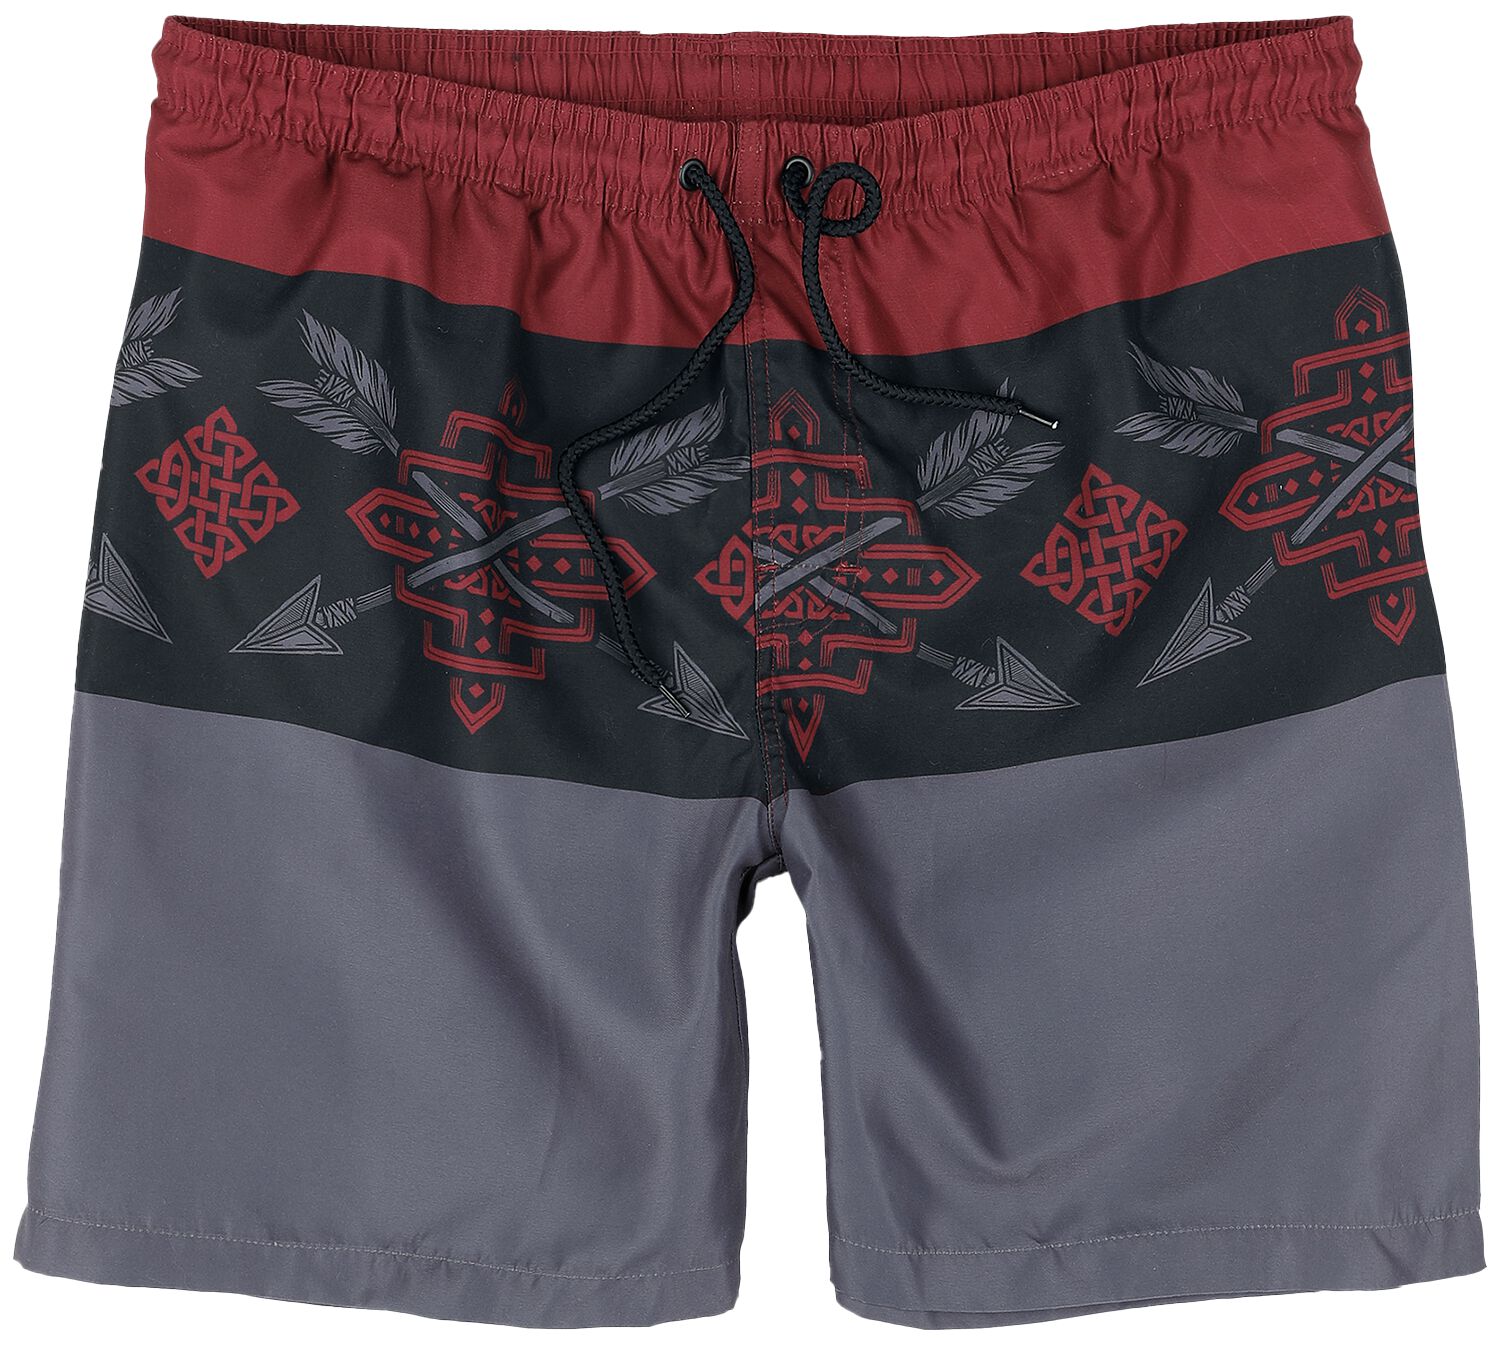 Black Premium by EMP Tricolor Swim Shorts with Arrow Print Badeshort rot schwarz in XL